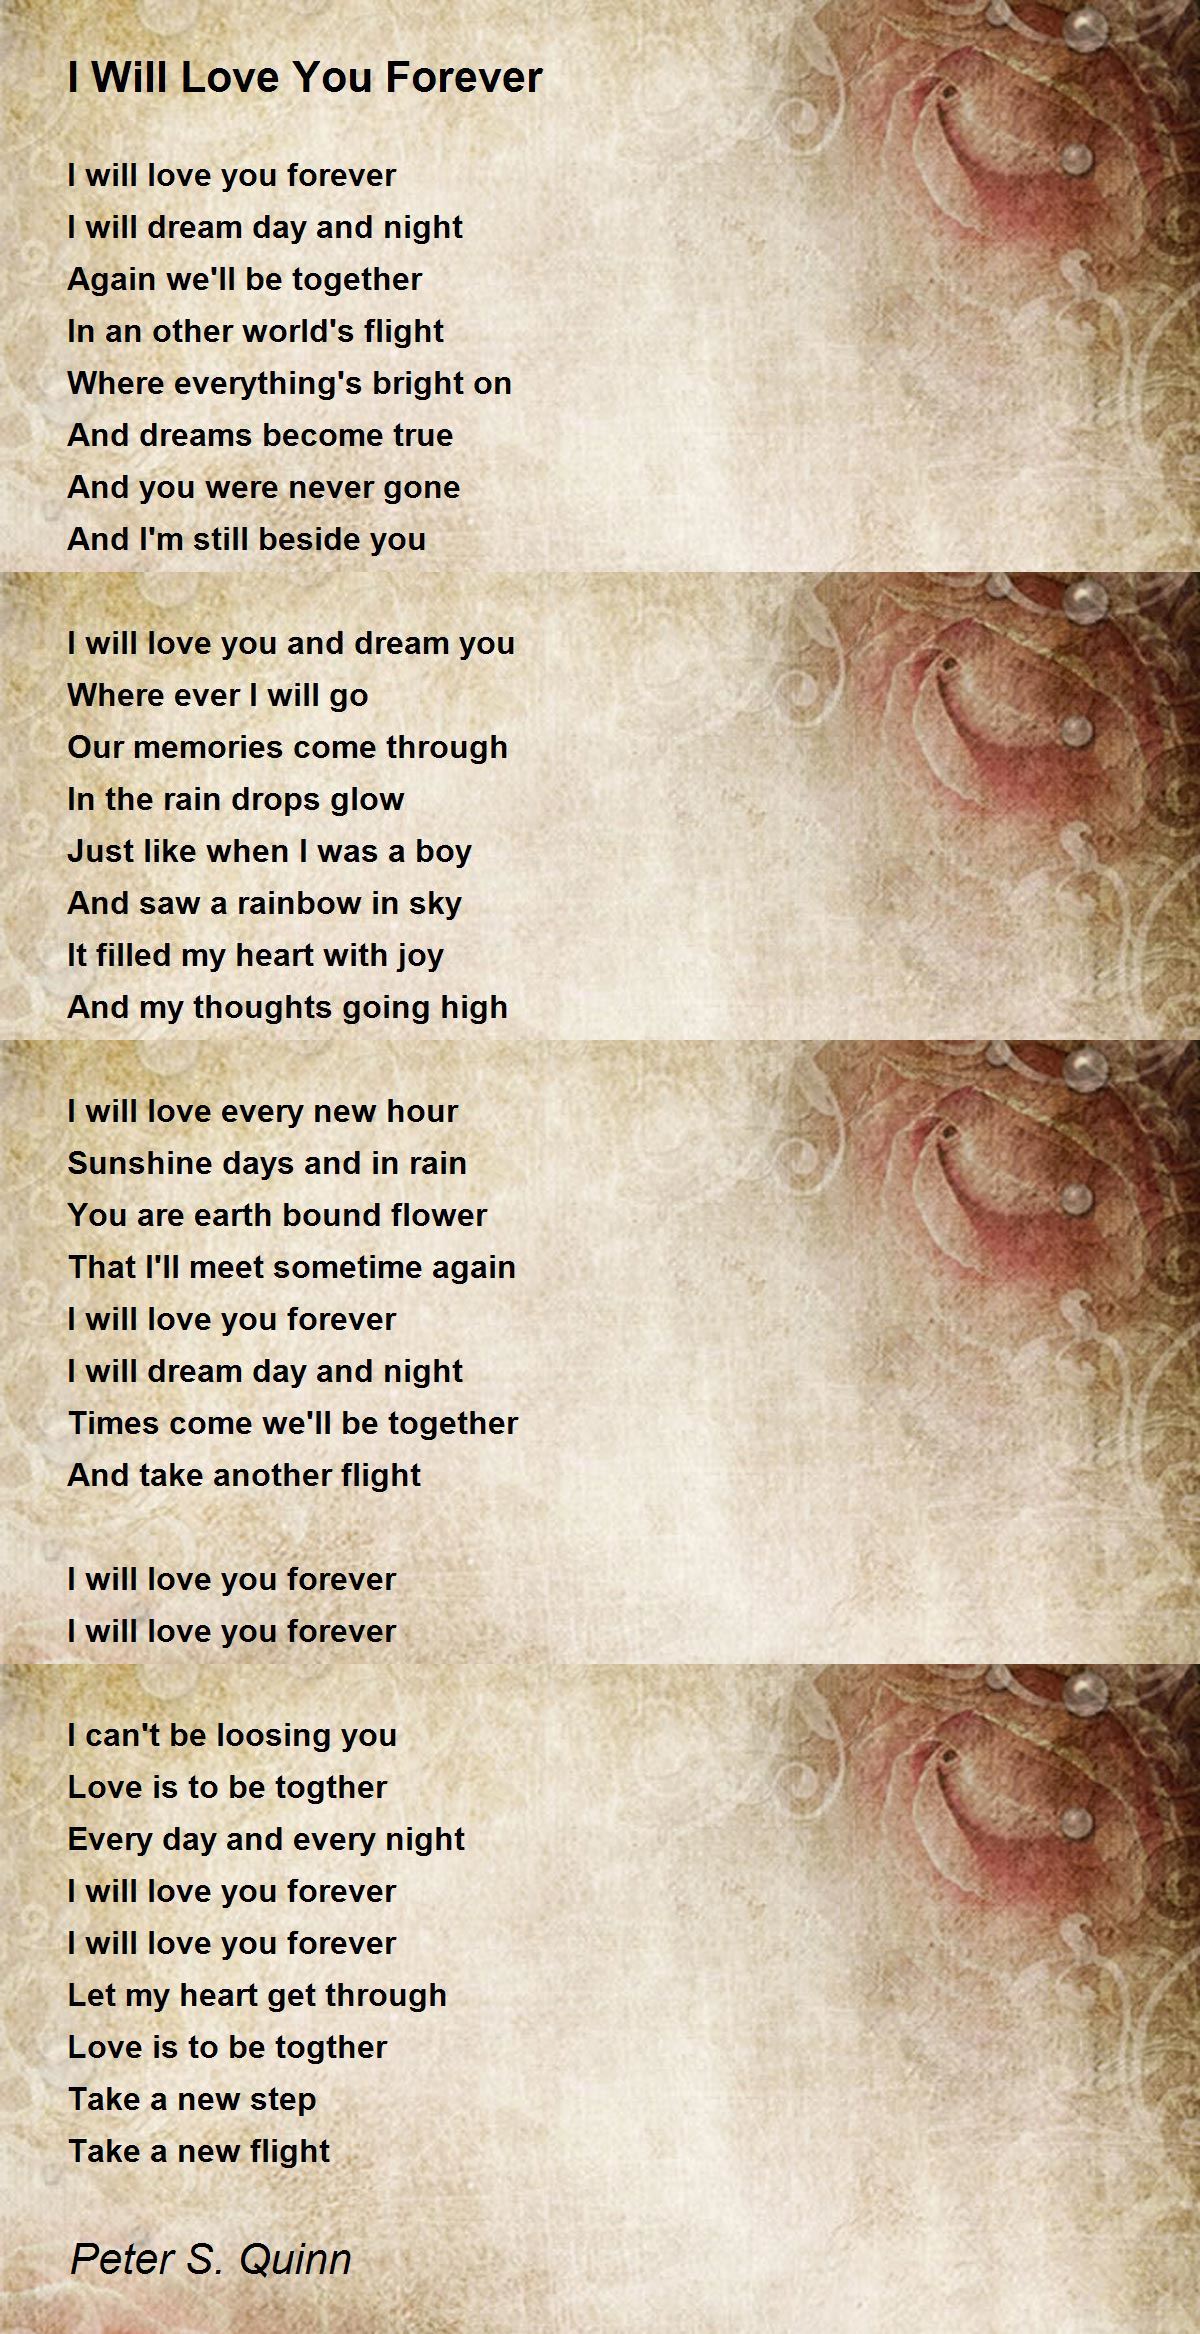 I Will Love You Forever - I Will Love You Forever Poem by Peter S. Quinn